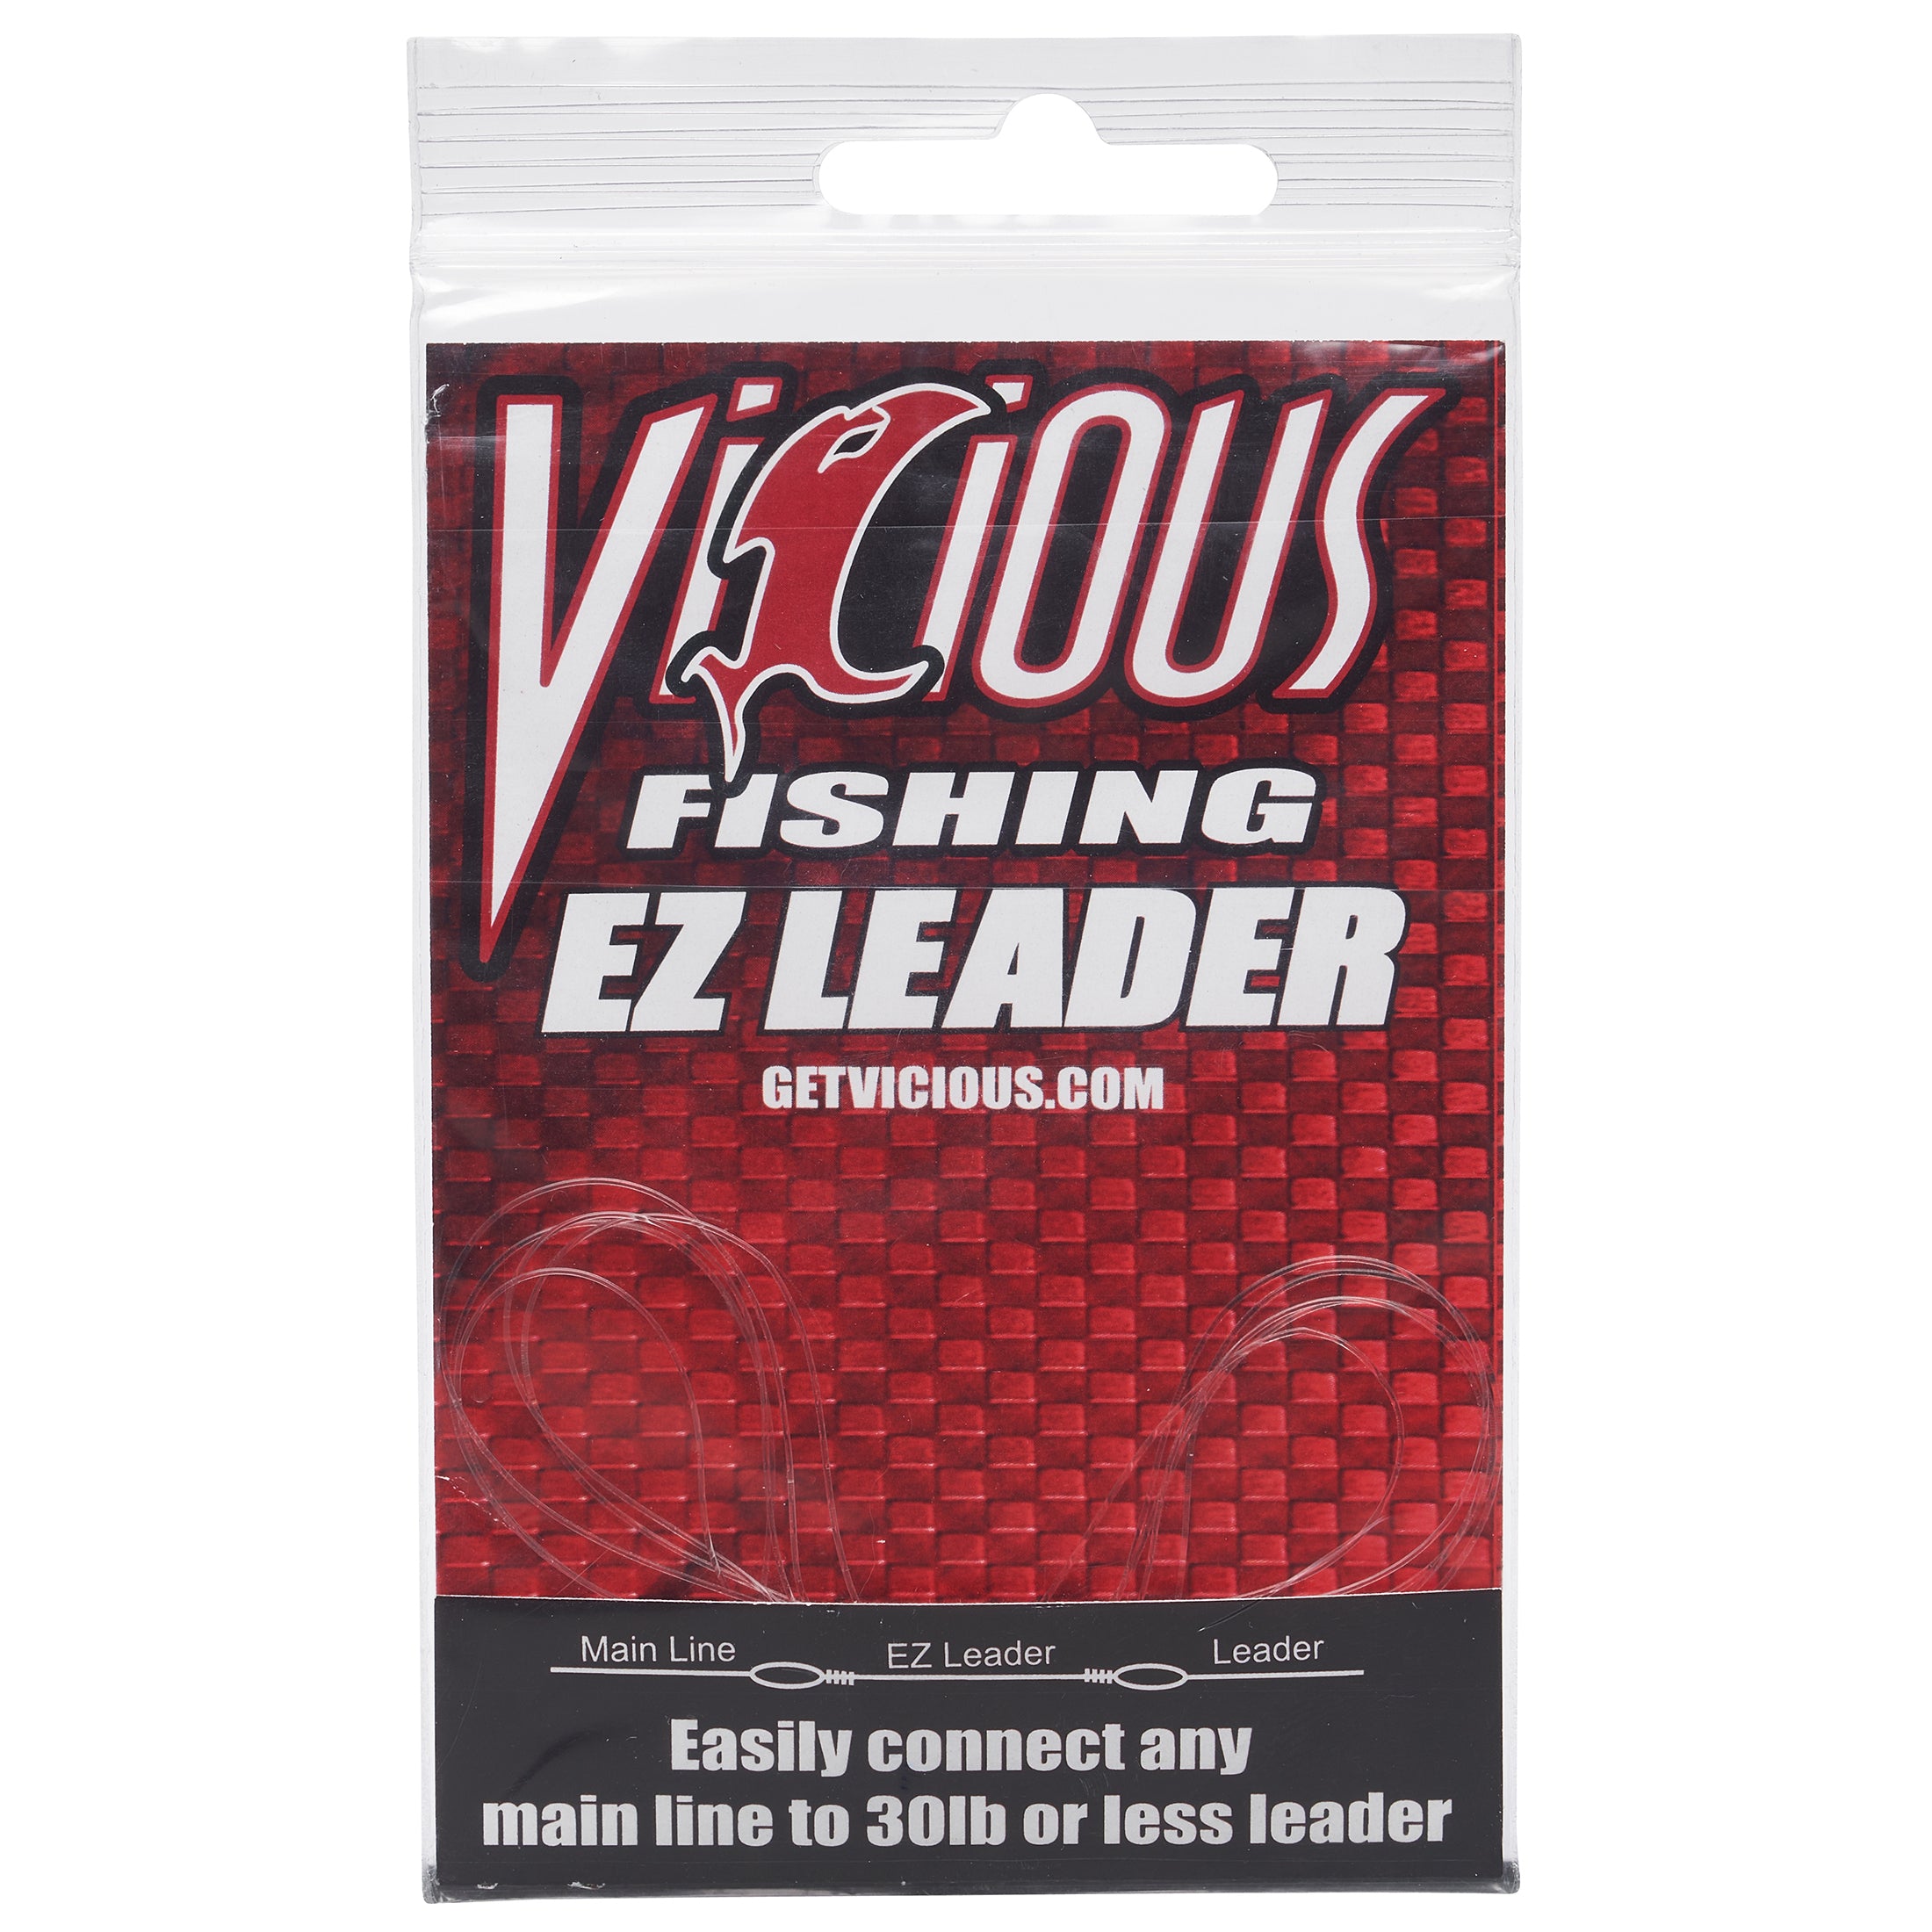 Vicious Fishing EZ Leader Pro Series Fishing Leader Kit, 150 Yards 10lb  Braid, 30 Yards 8lb Fluoro, 5 EZ Leader Connectors